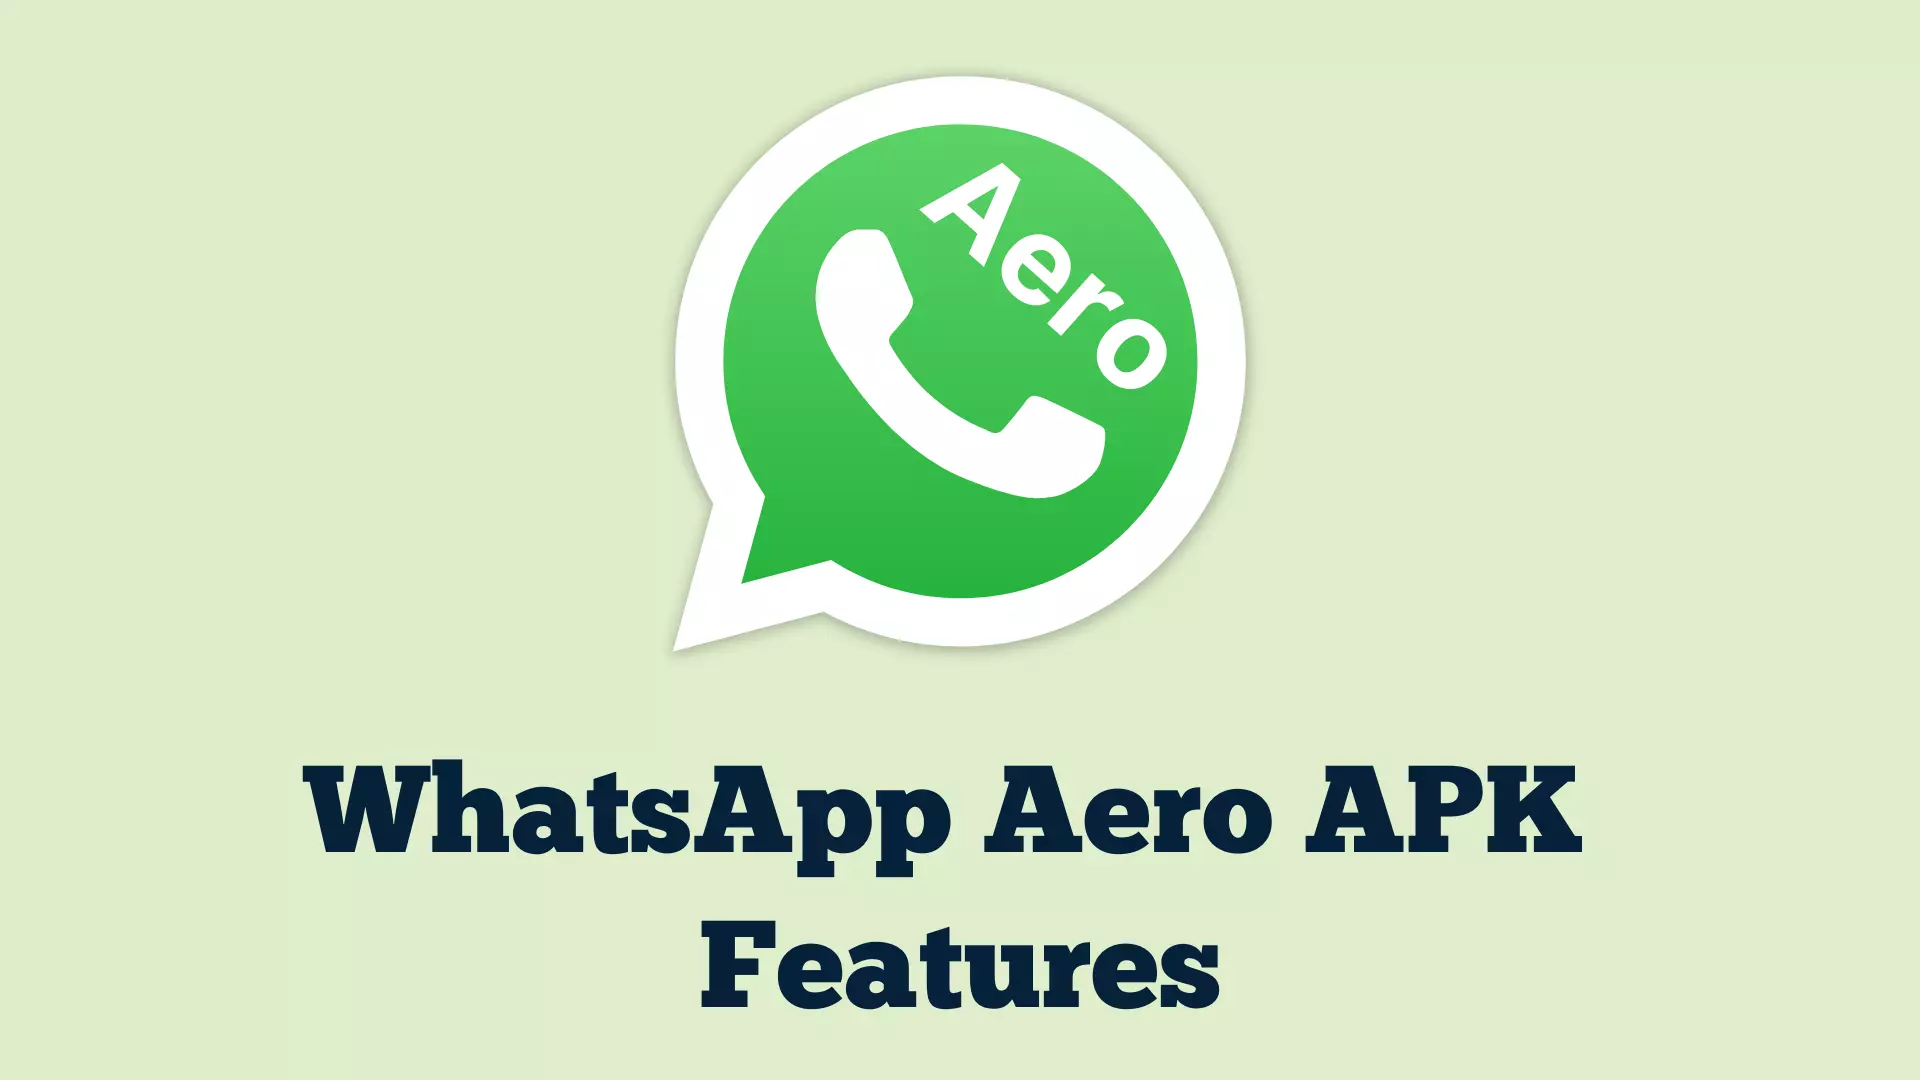 WhatsApp Aero APK Features